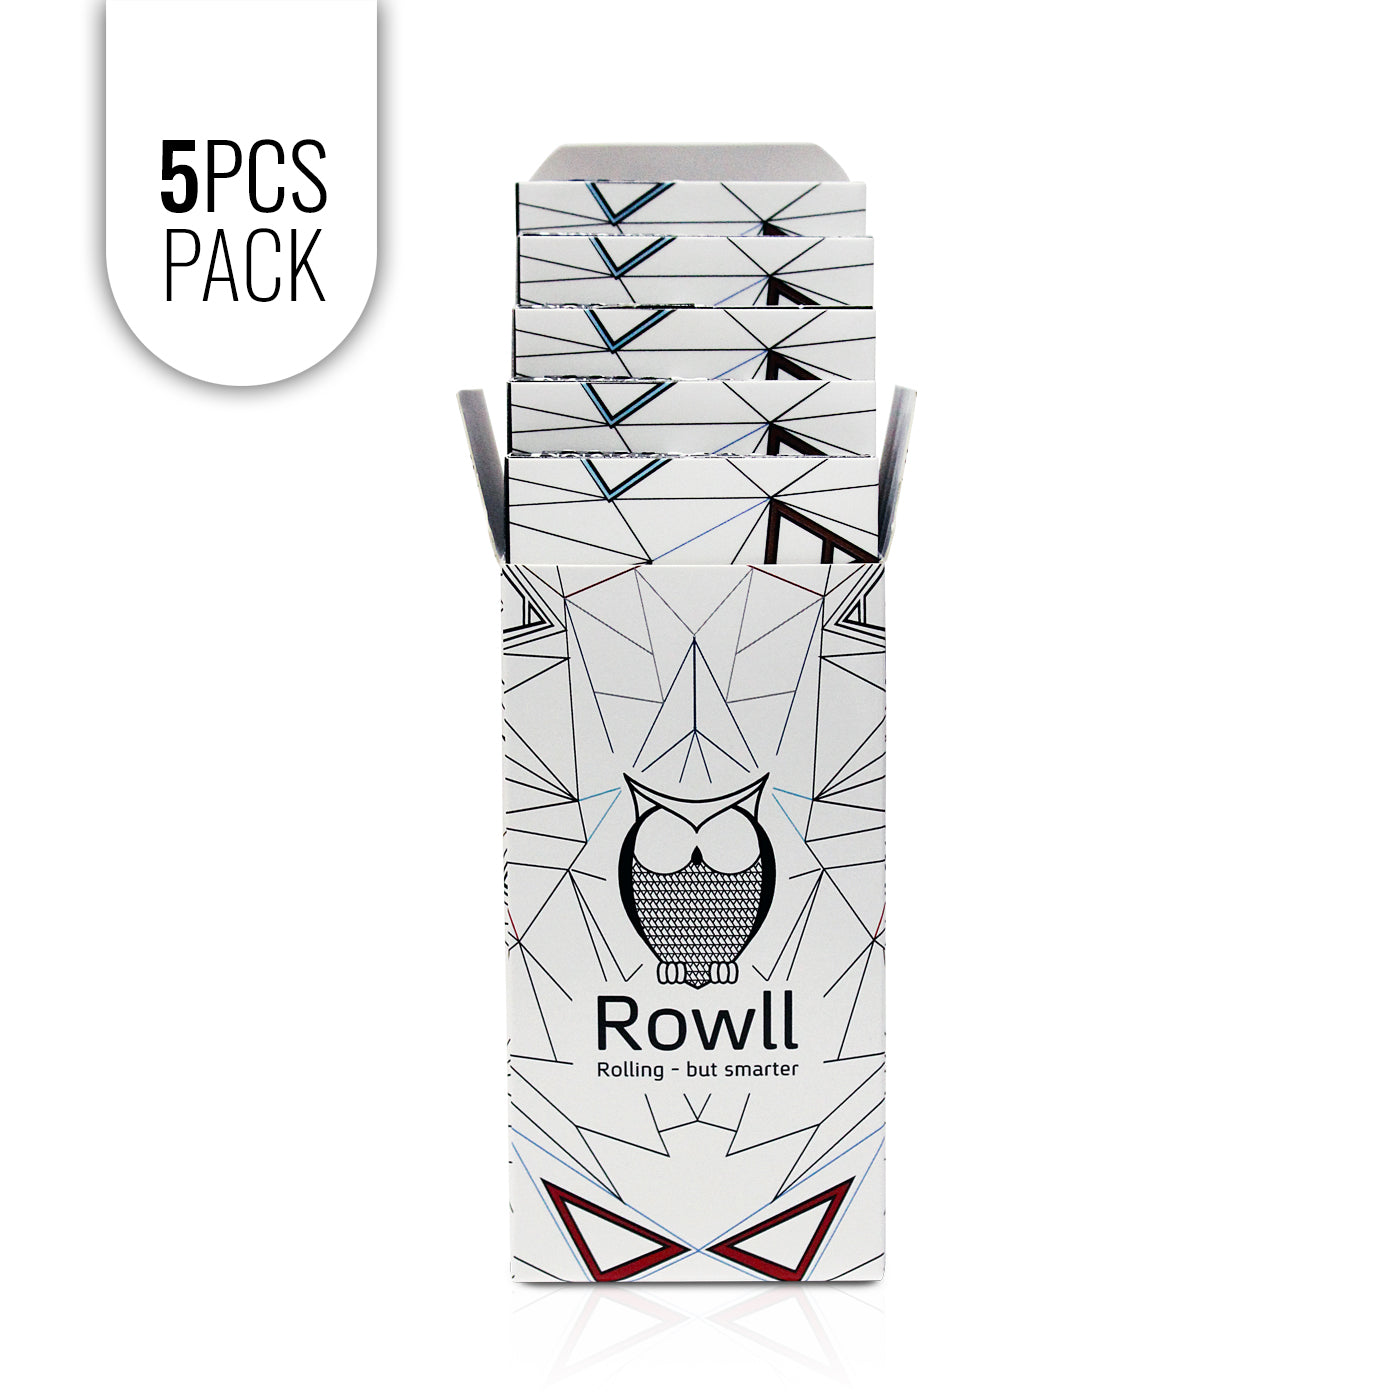 ROWLL all in 1 Rolling Kit (2 PCS) – Rowll - Rolling but smarter